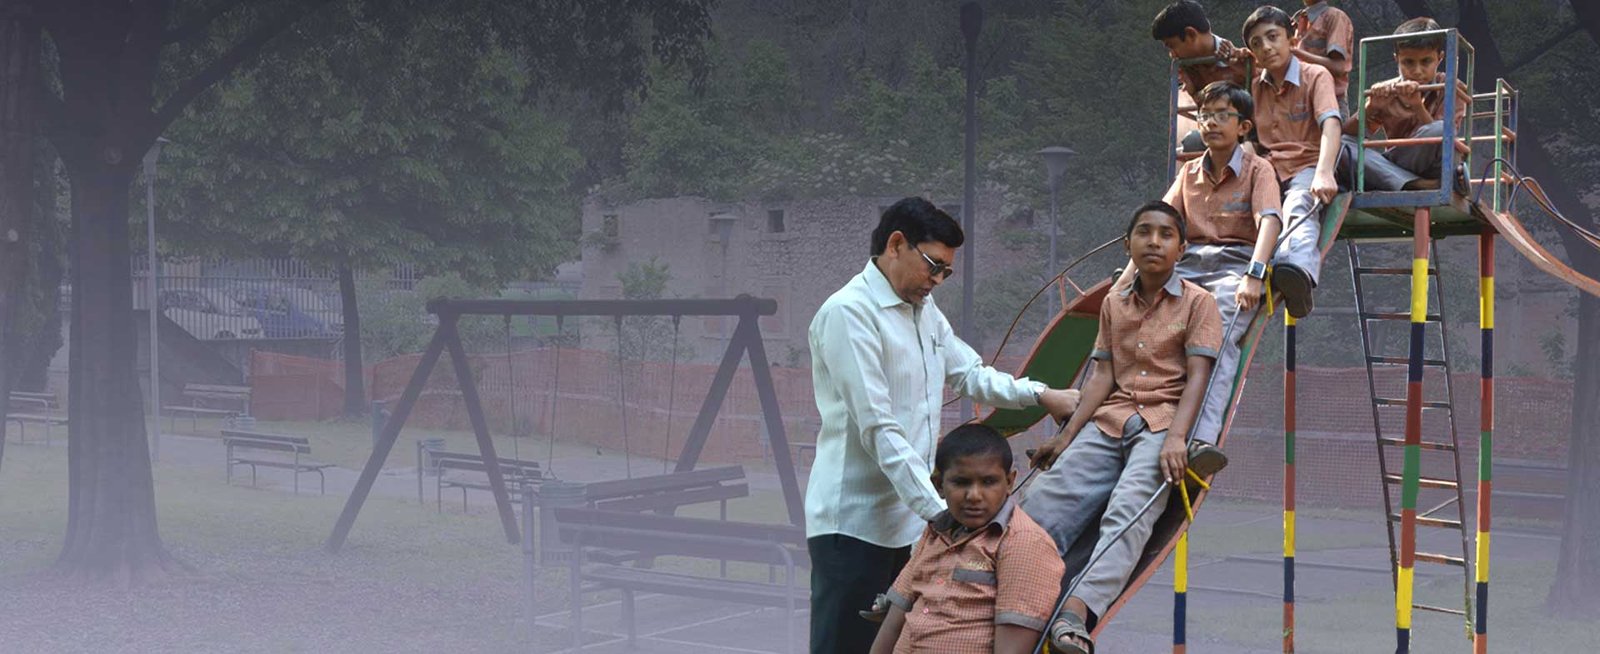 labhubhai-t-sonani-with-blind-children-in-park